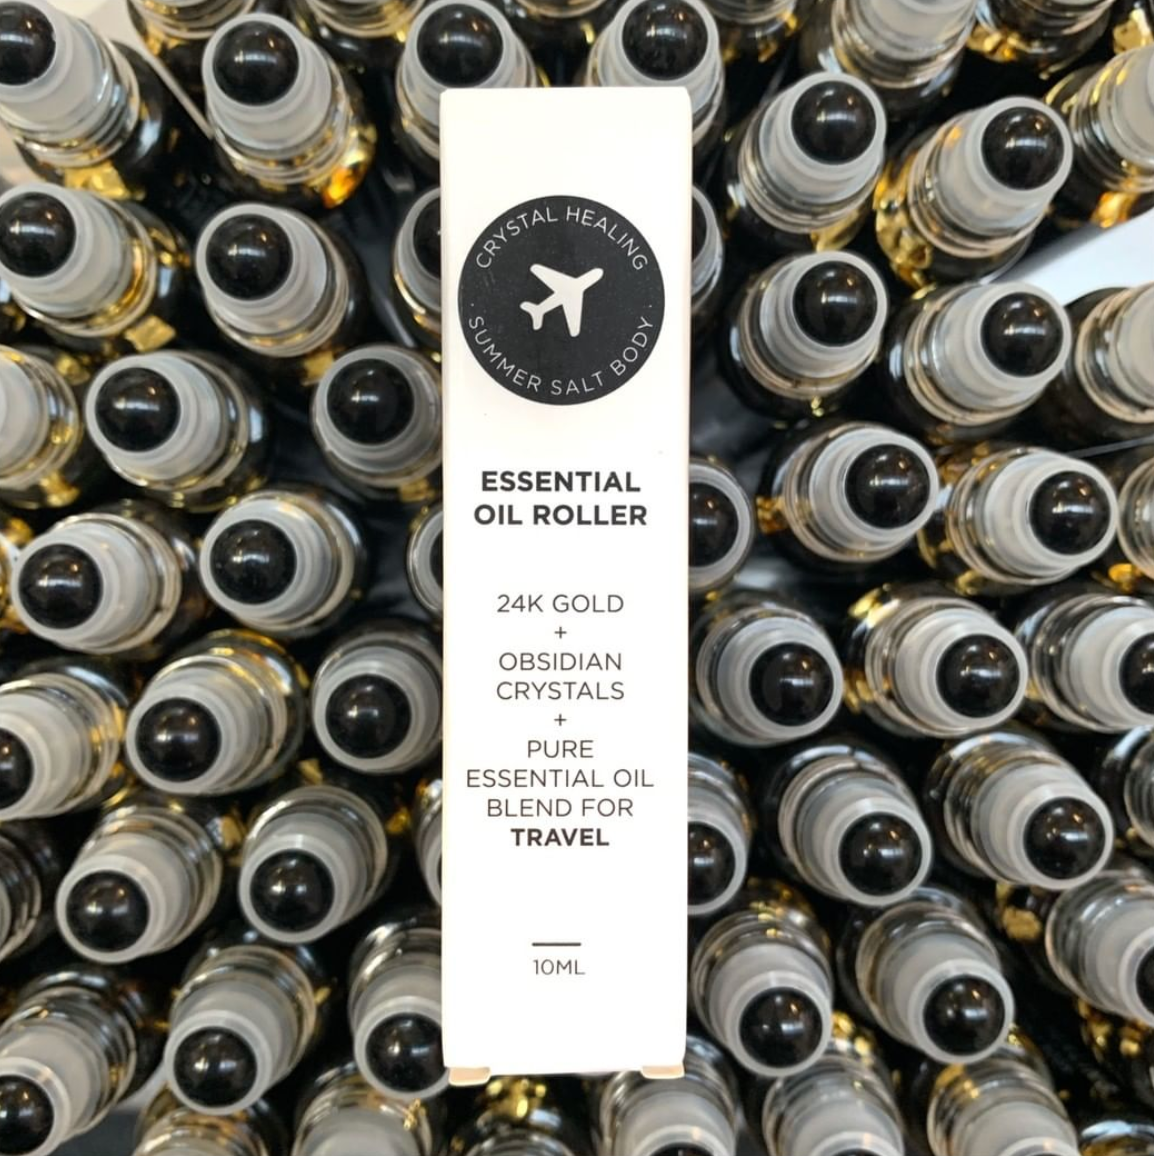 Travel Essential Oil Roller - 10ml